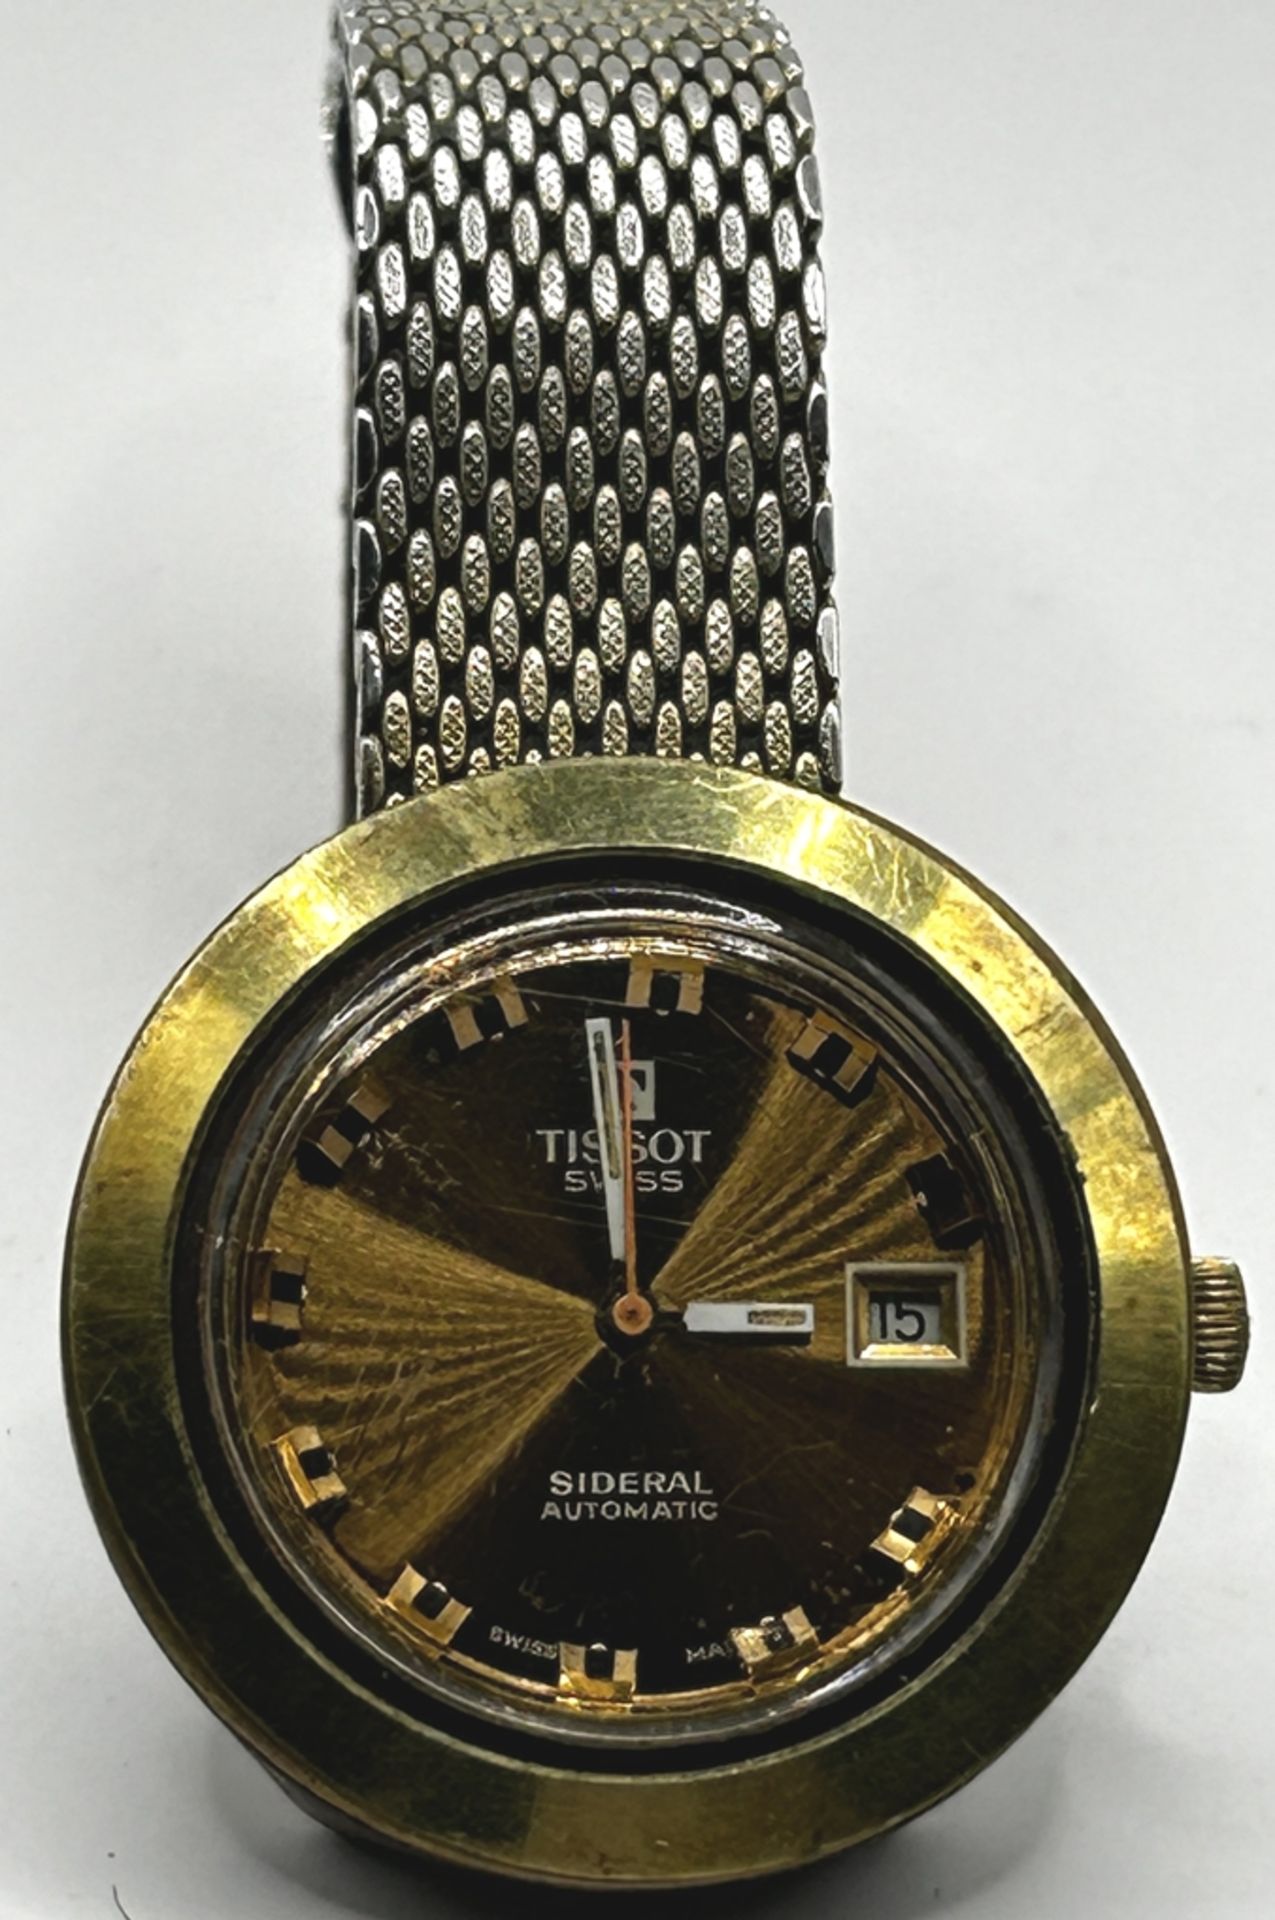 Tissot Sideral Automatic Vintage Uhr, Werk läuft, vergoldete Lünette, orig. Stahlband, Fiberglas-Ge - Image 2 of 3